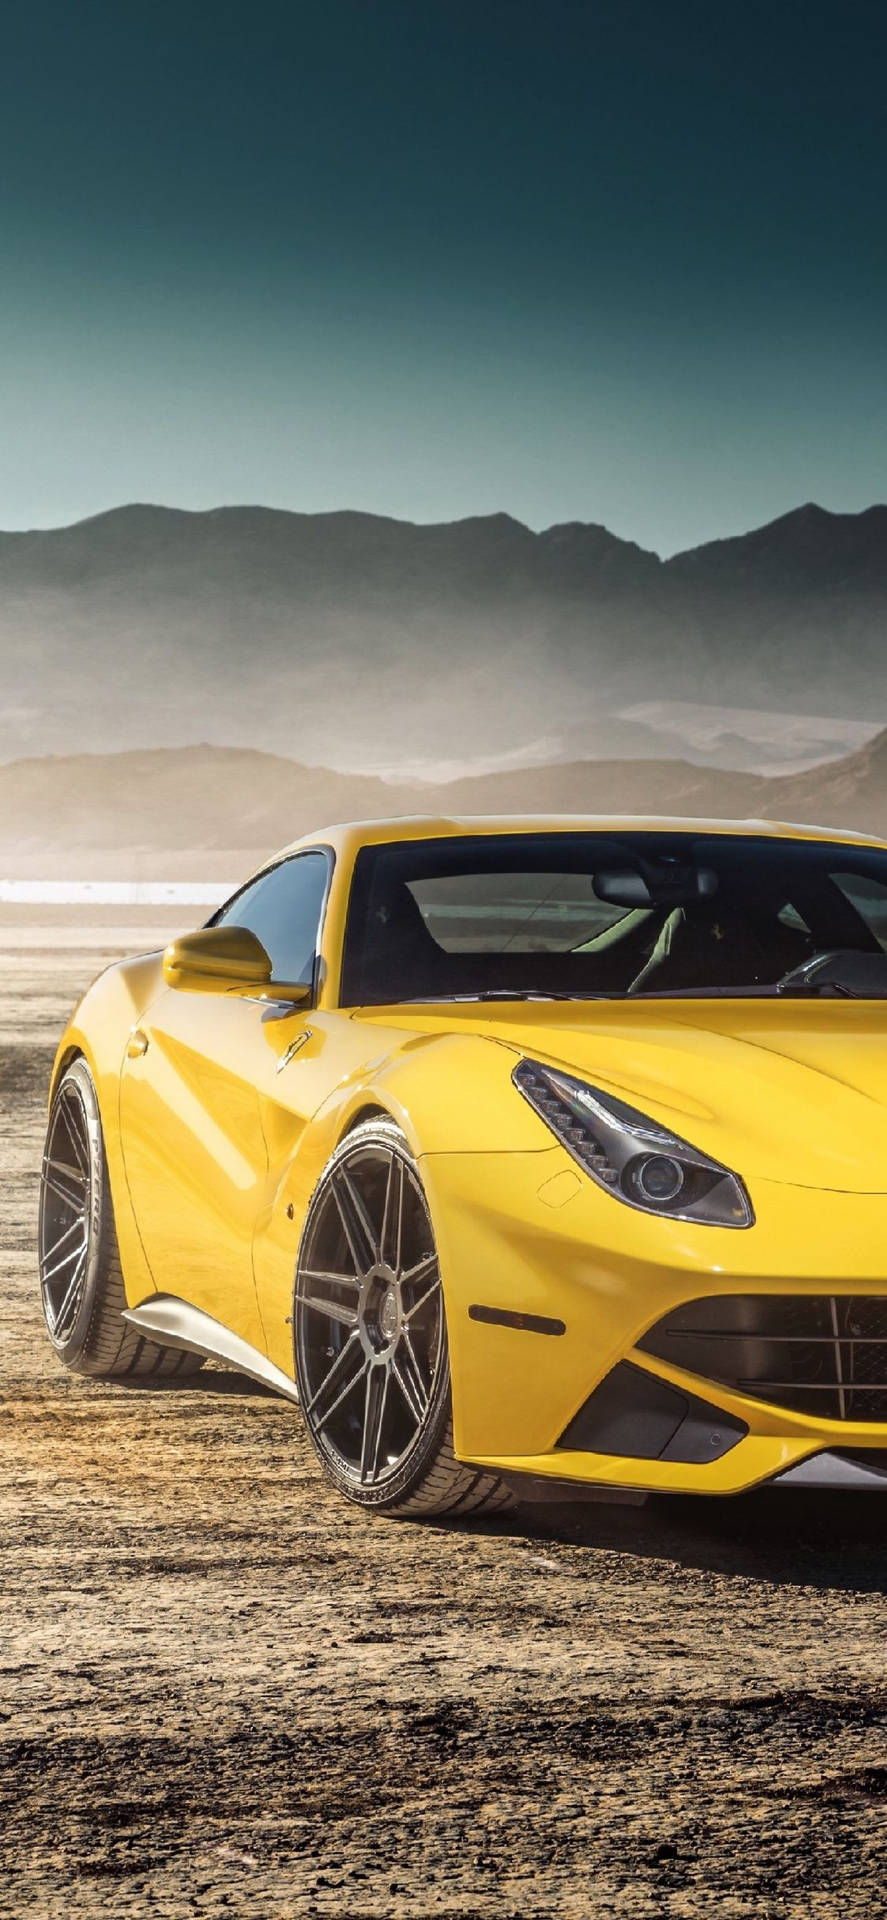 Stunning Image Of Yellow Ferrari Iphone Wallpaper Background